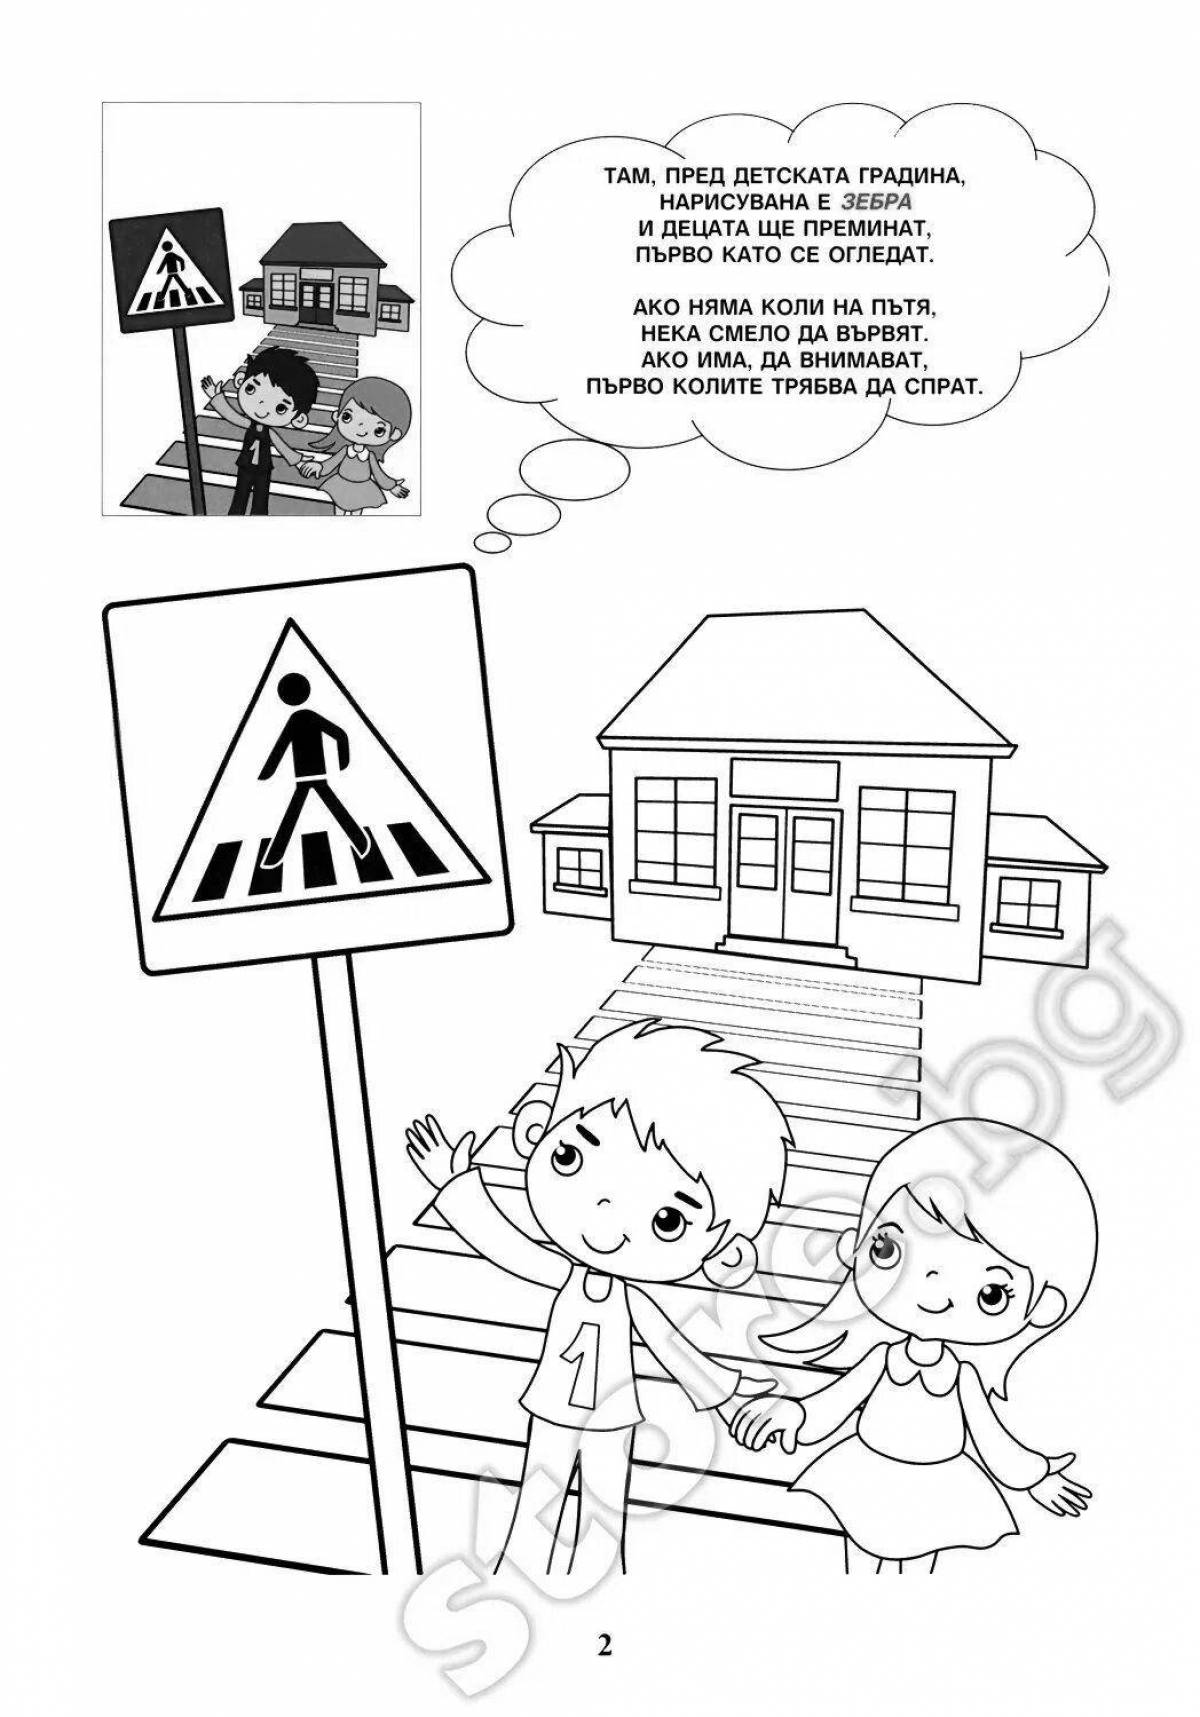 Creative traffic rules for schoolchildren